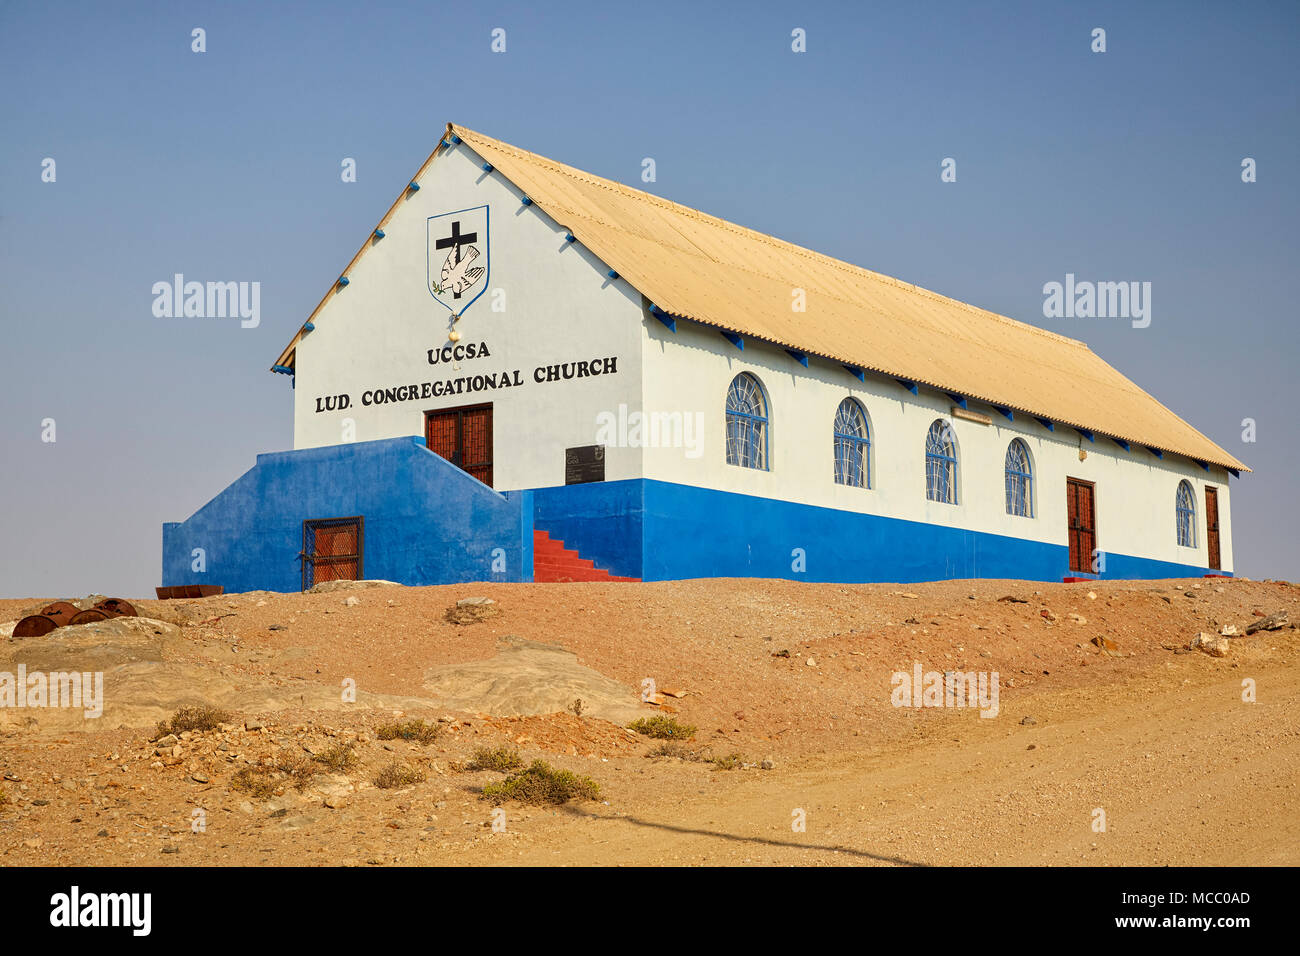 UCCSA Luderitz Chiesa congregazionale in Luderitz, Namibia, Africa Foto Stock